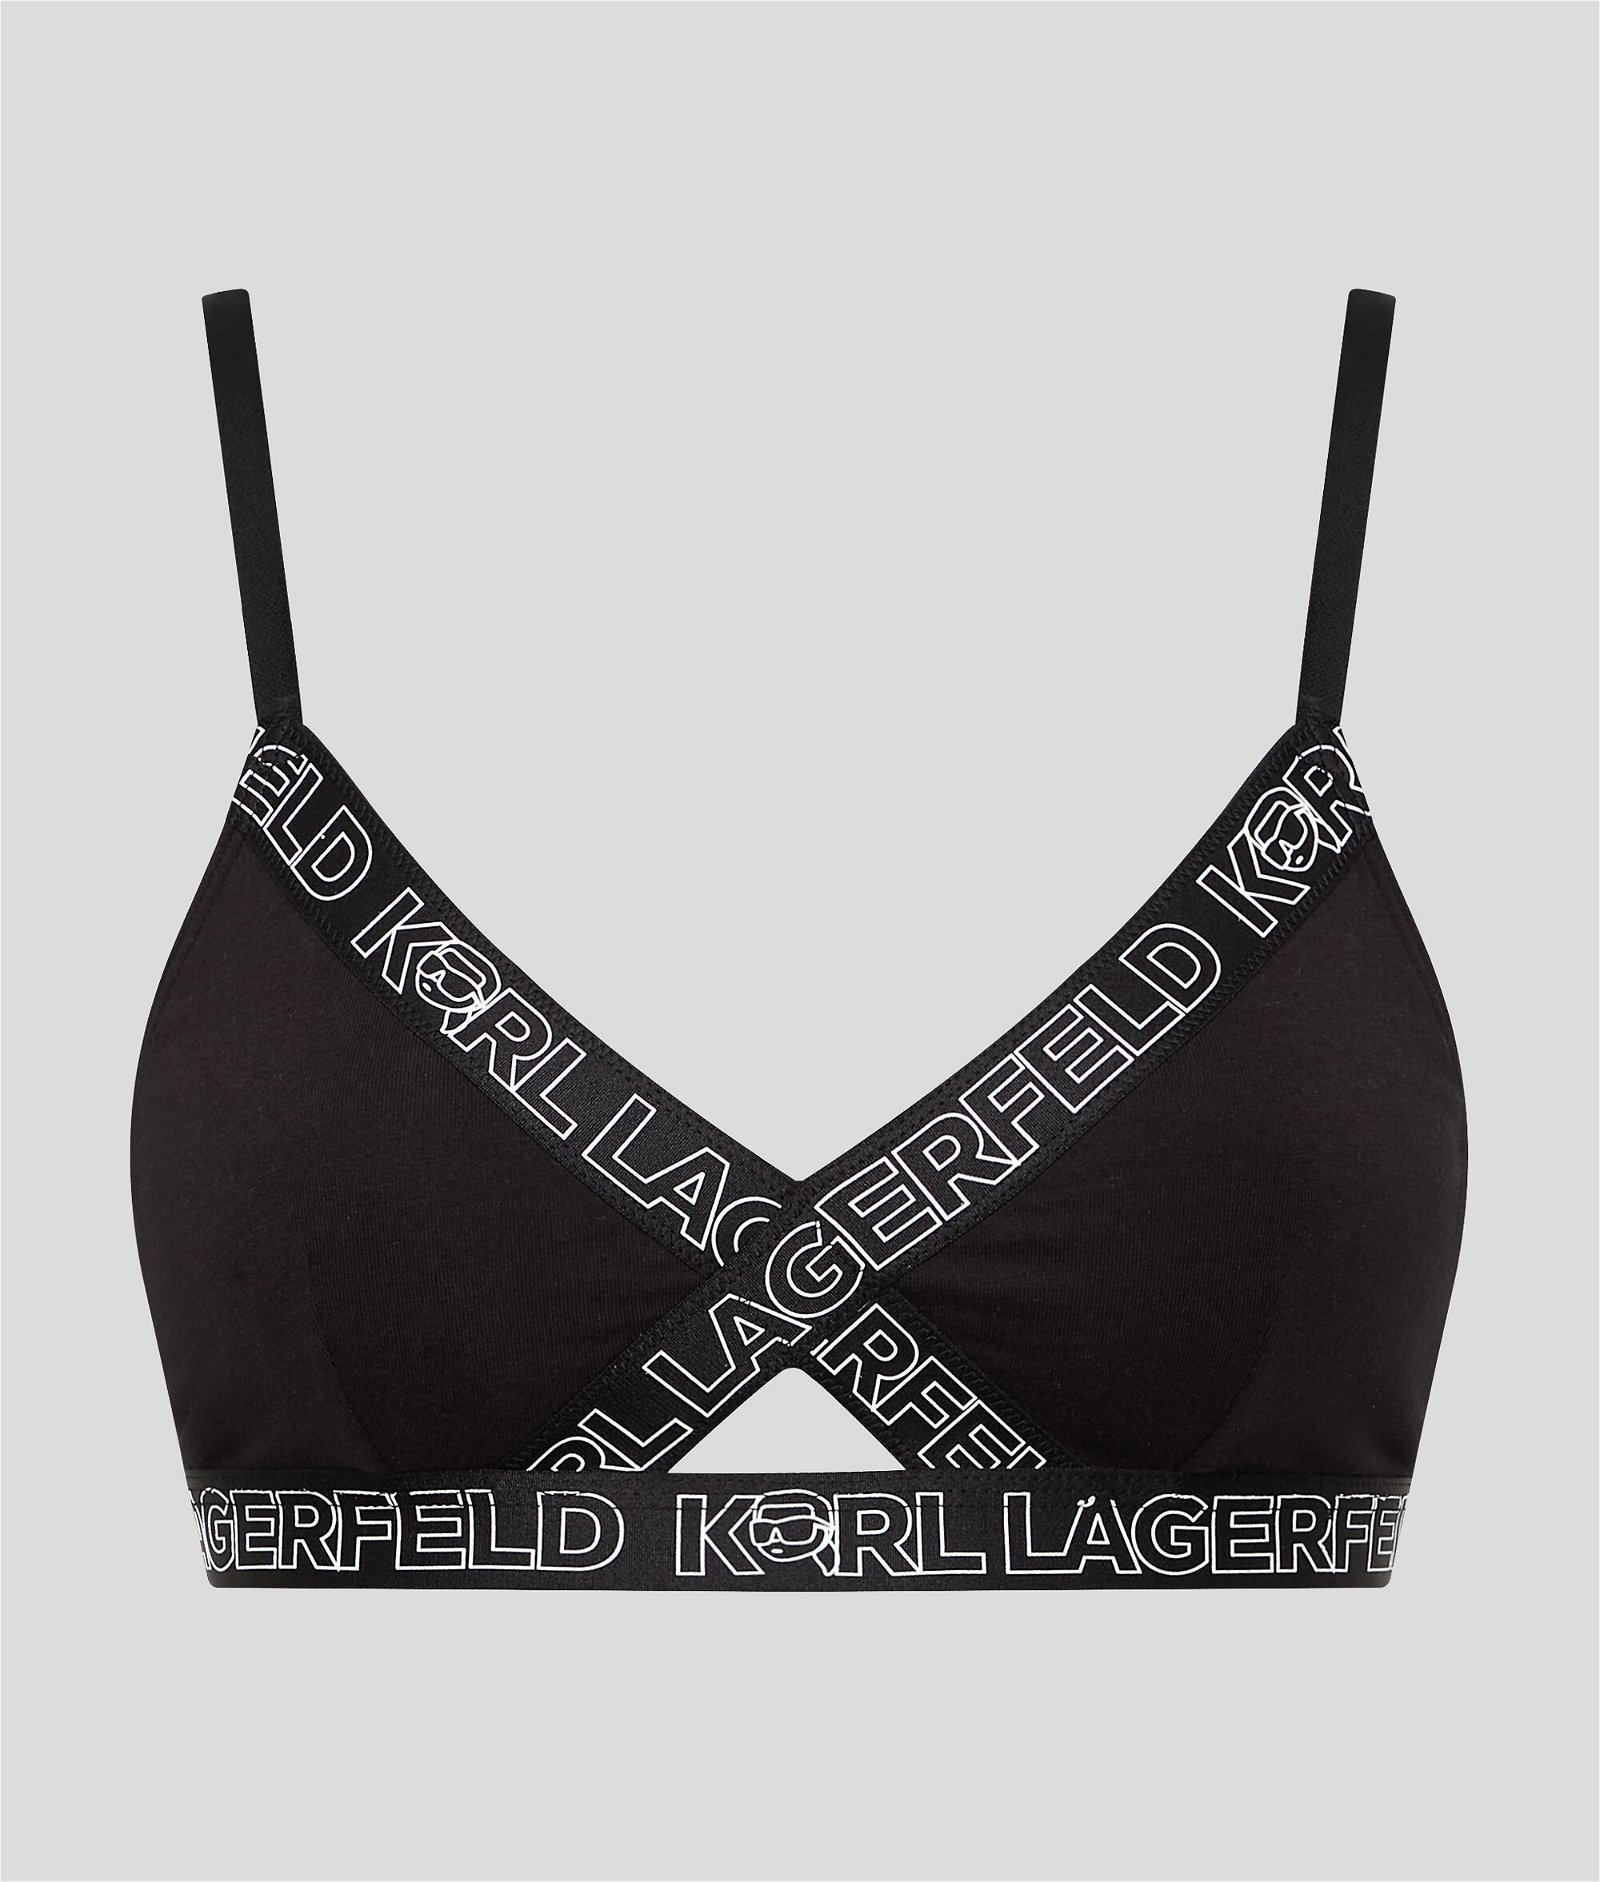 Peephole Bra lingerie technical fashion-插圖素材[74305000